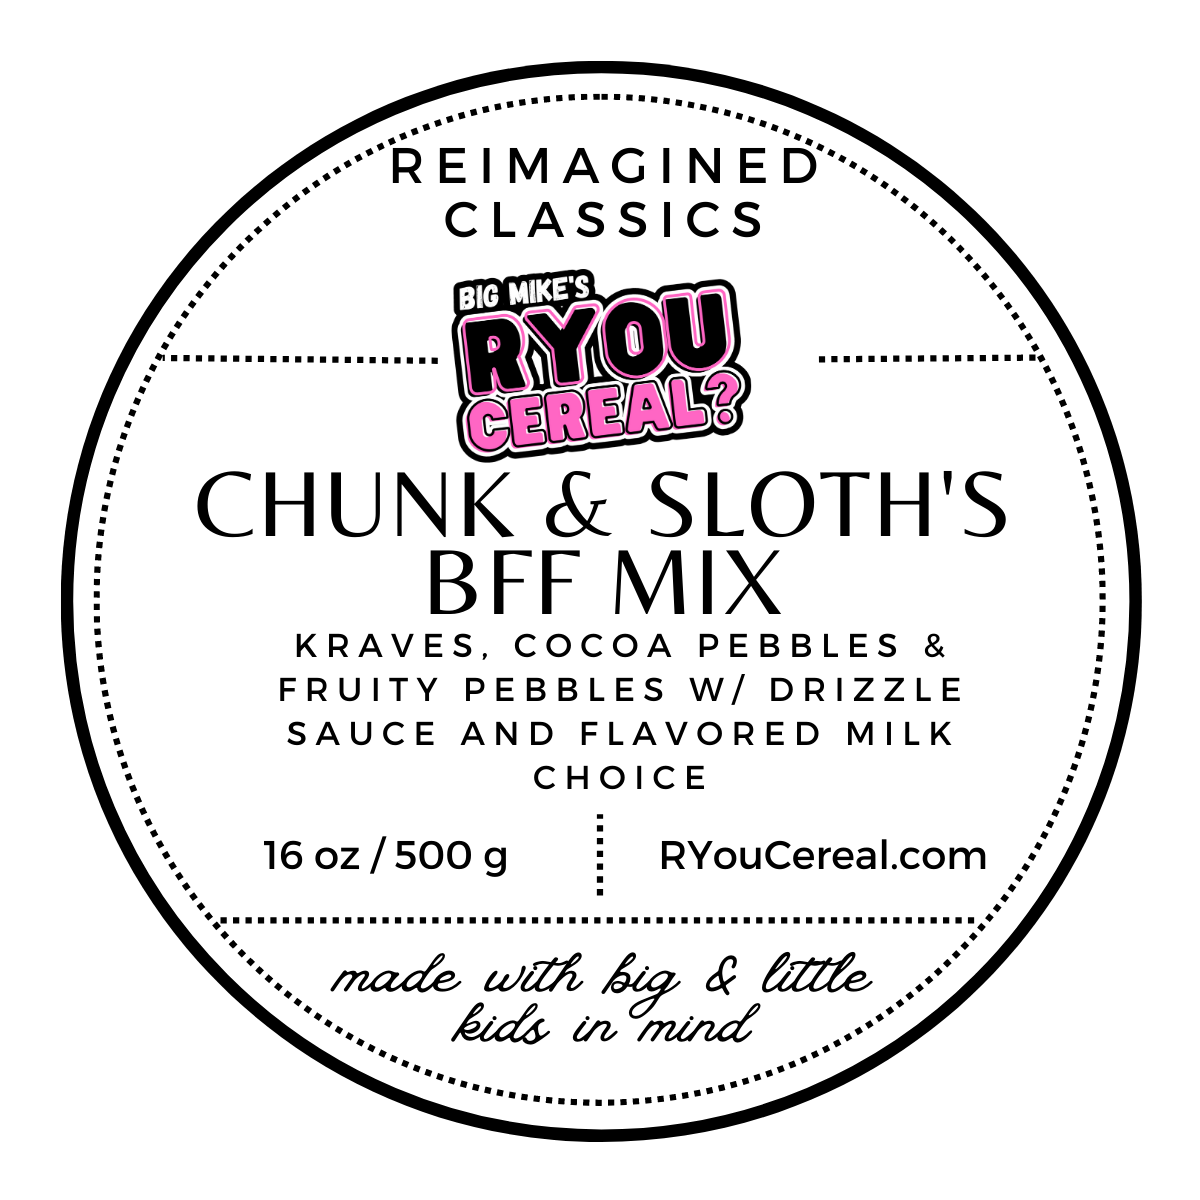 Chunk & Sloth's BFF Mix